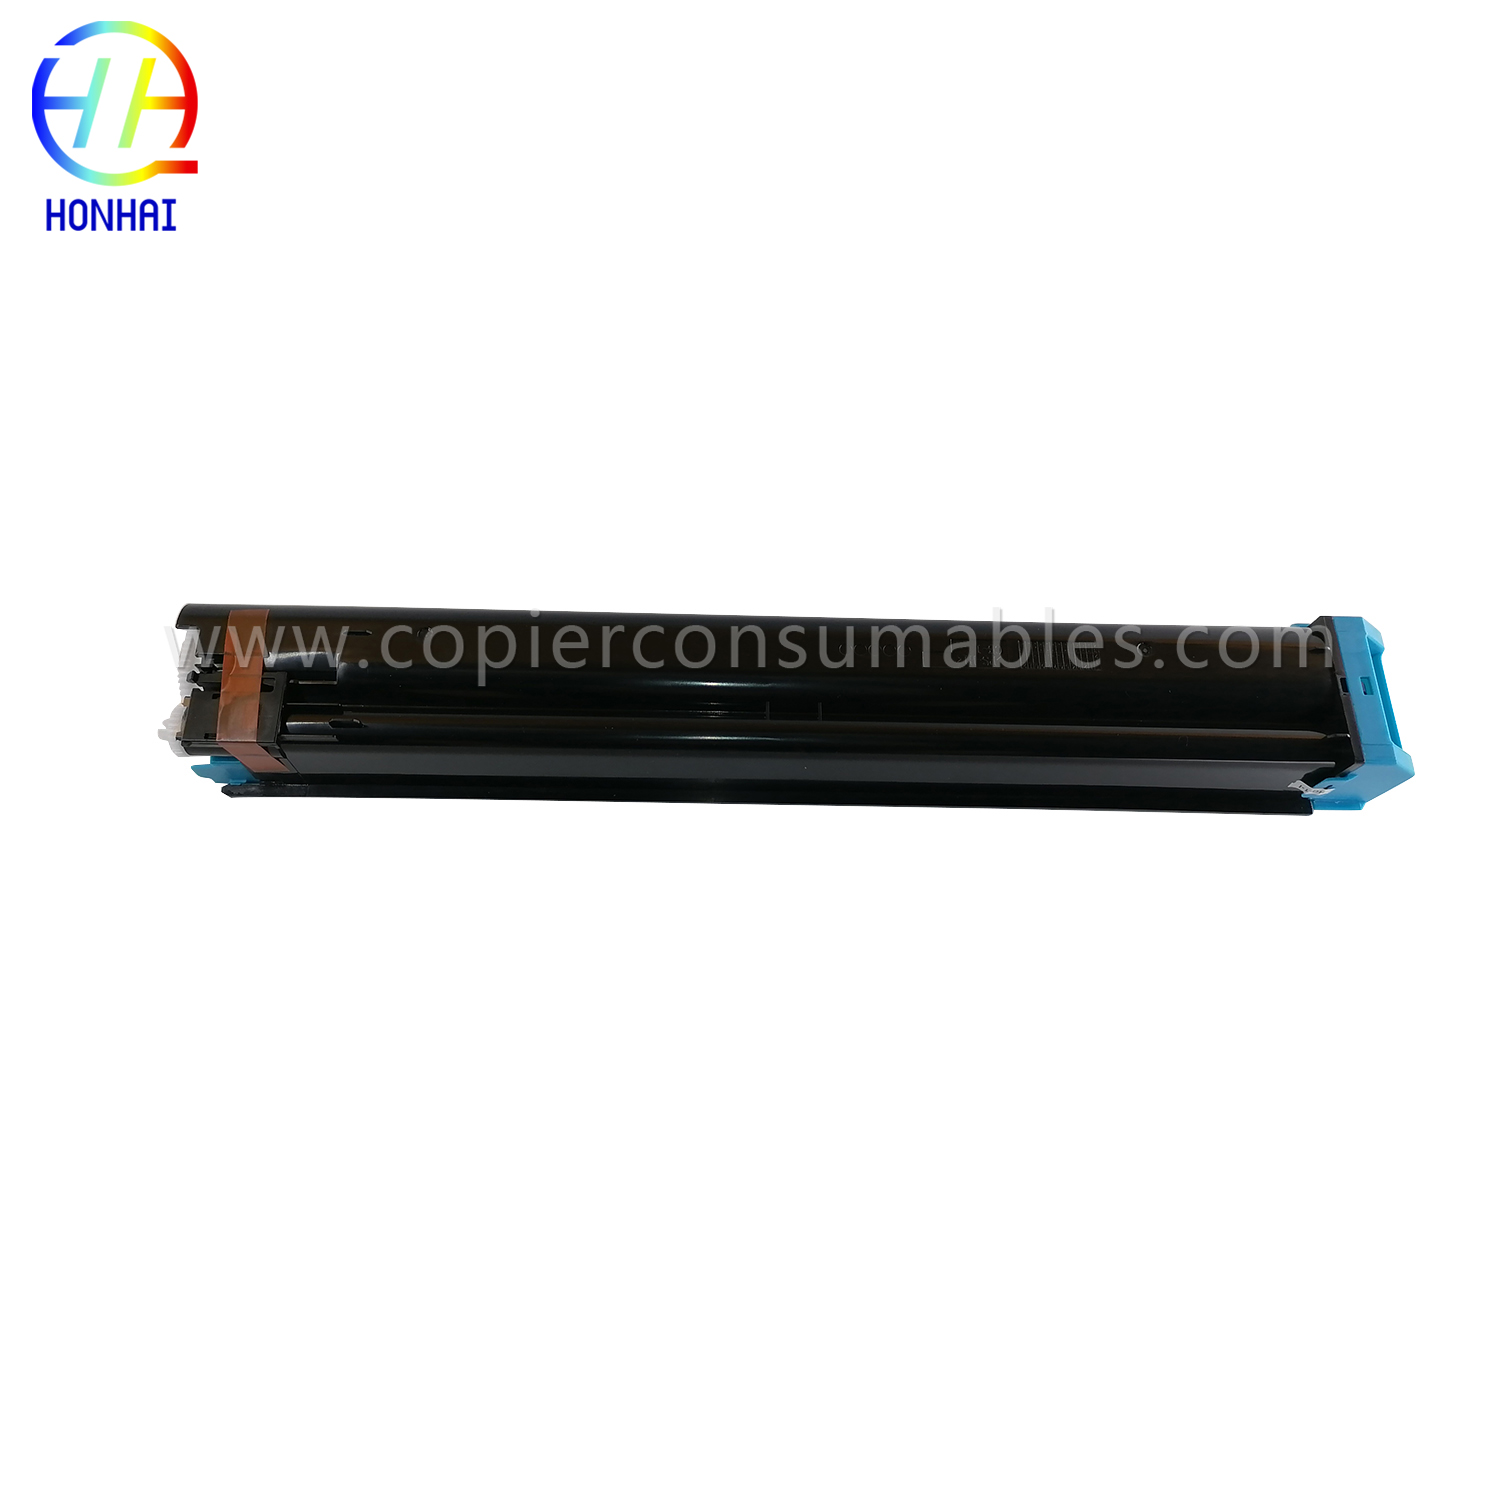 Toner Cartridge Cyan for Sharp MX-23FTCA